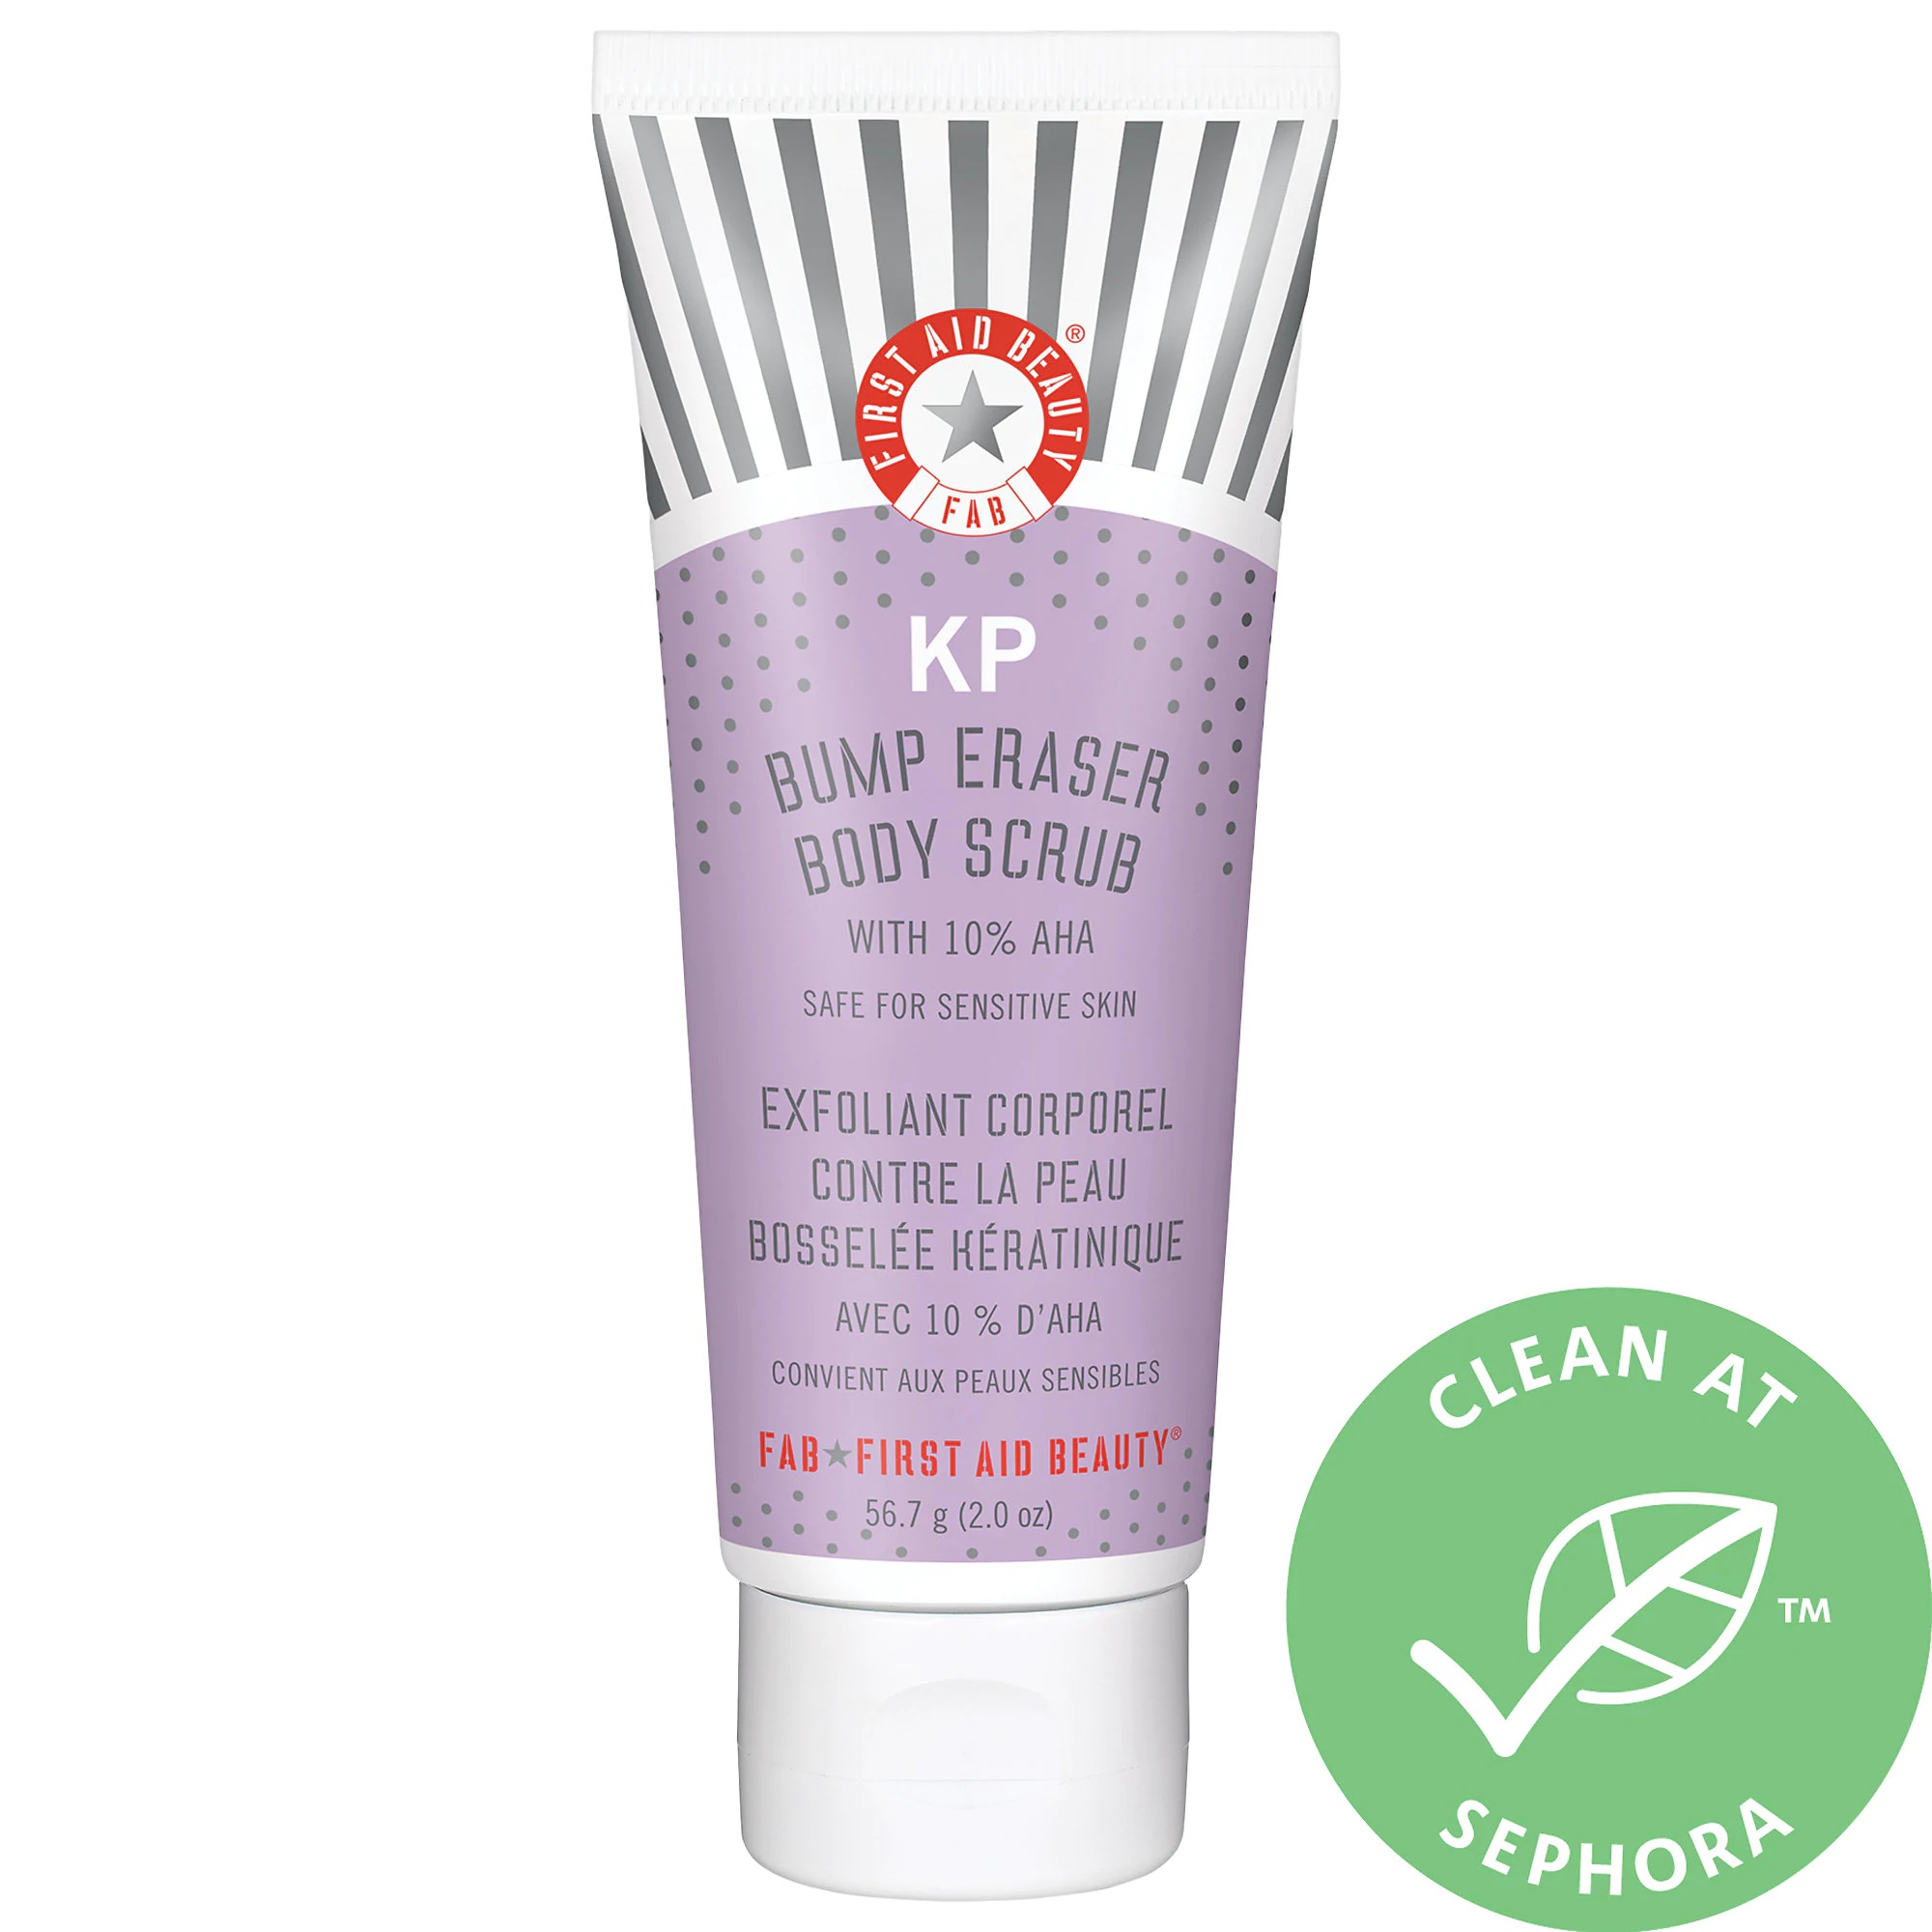 First Aid Beauty Mini Kp Bump Eraser Body Scrub With 10% Aha